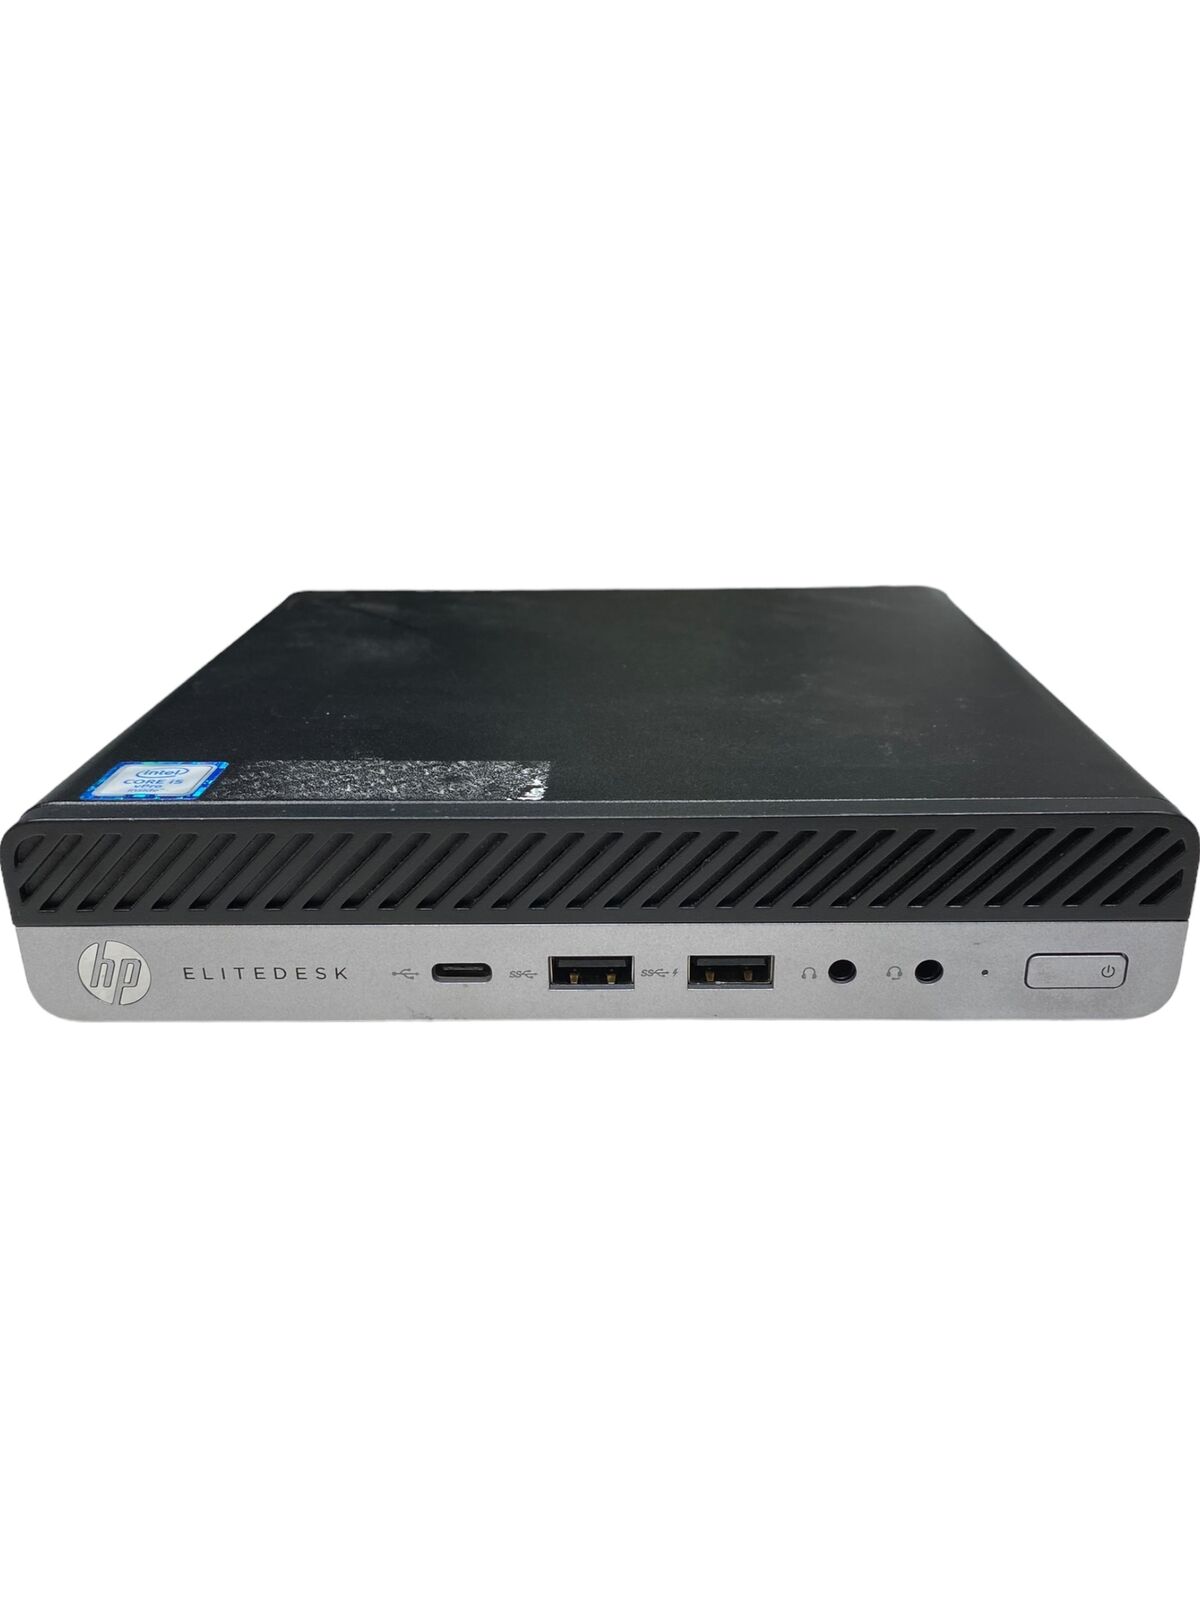 HP EliteDesk 800 G3 i5-6500T 2.50GHz SSD 128GB 8GB Desktop PC